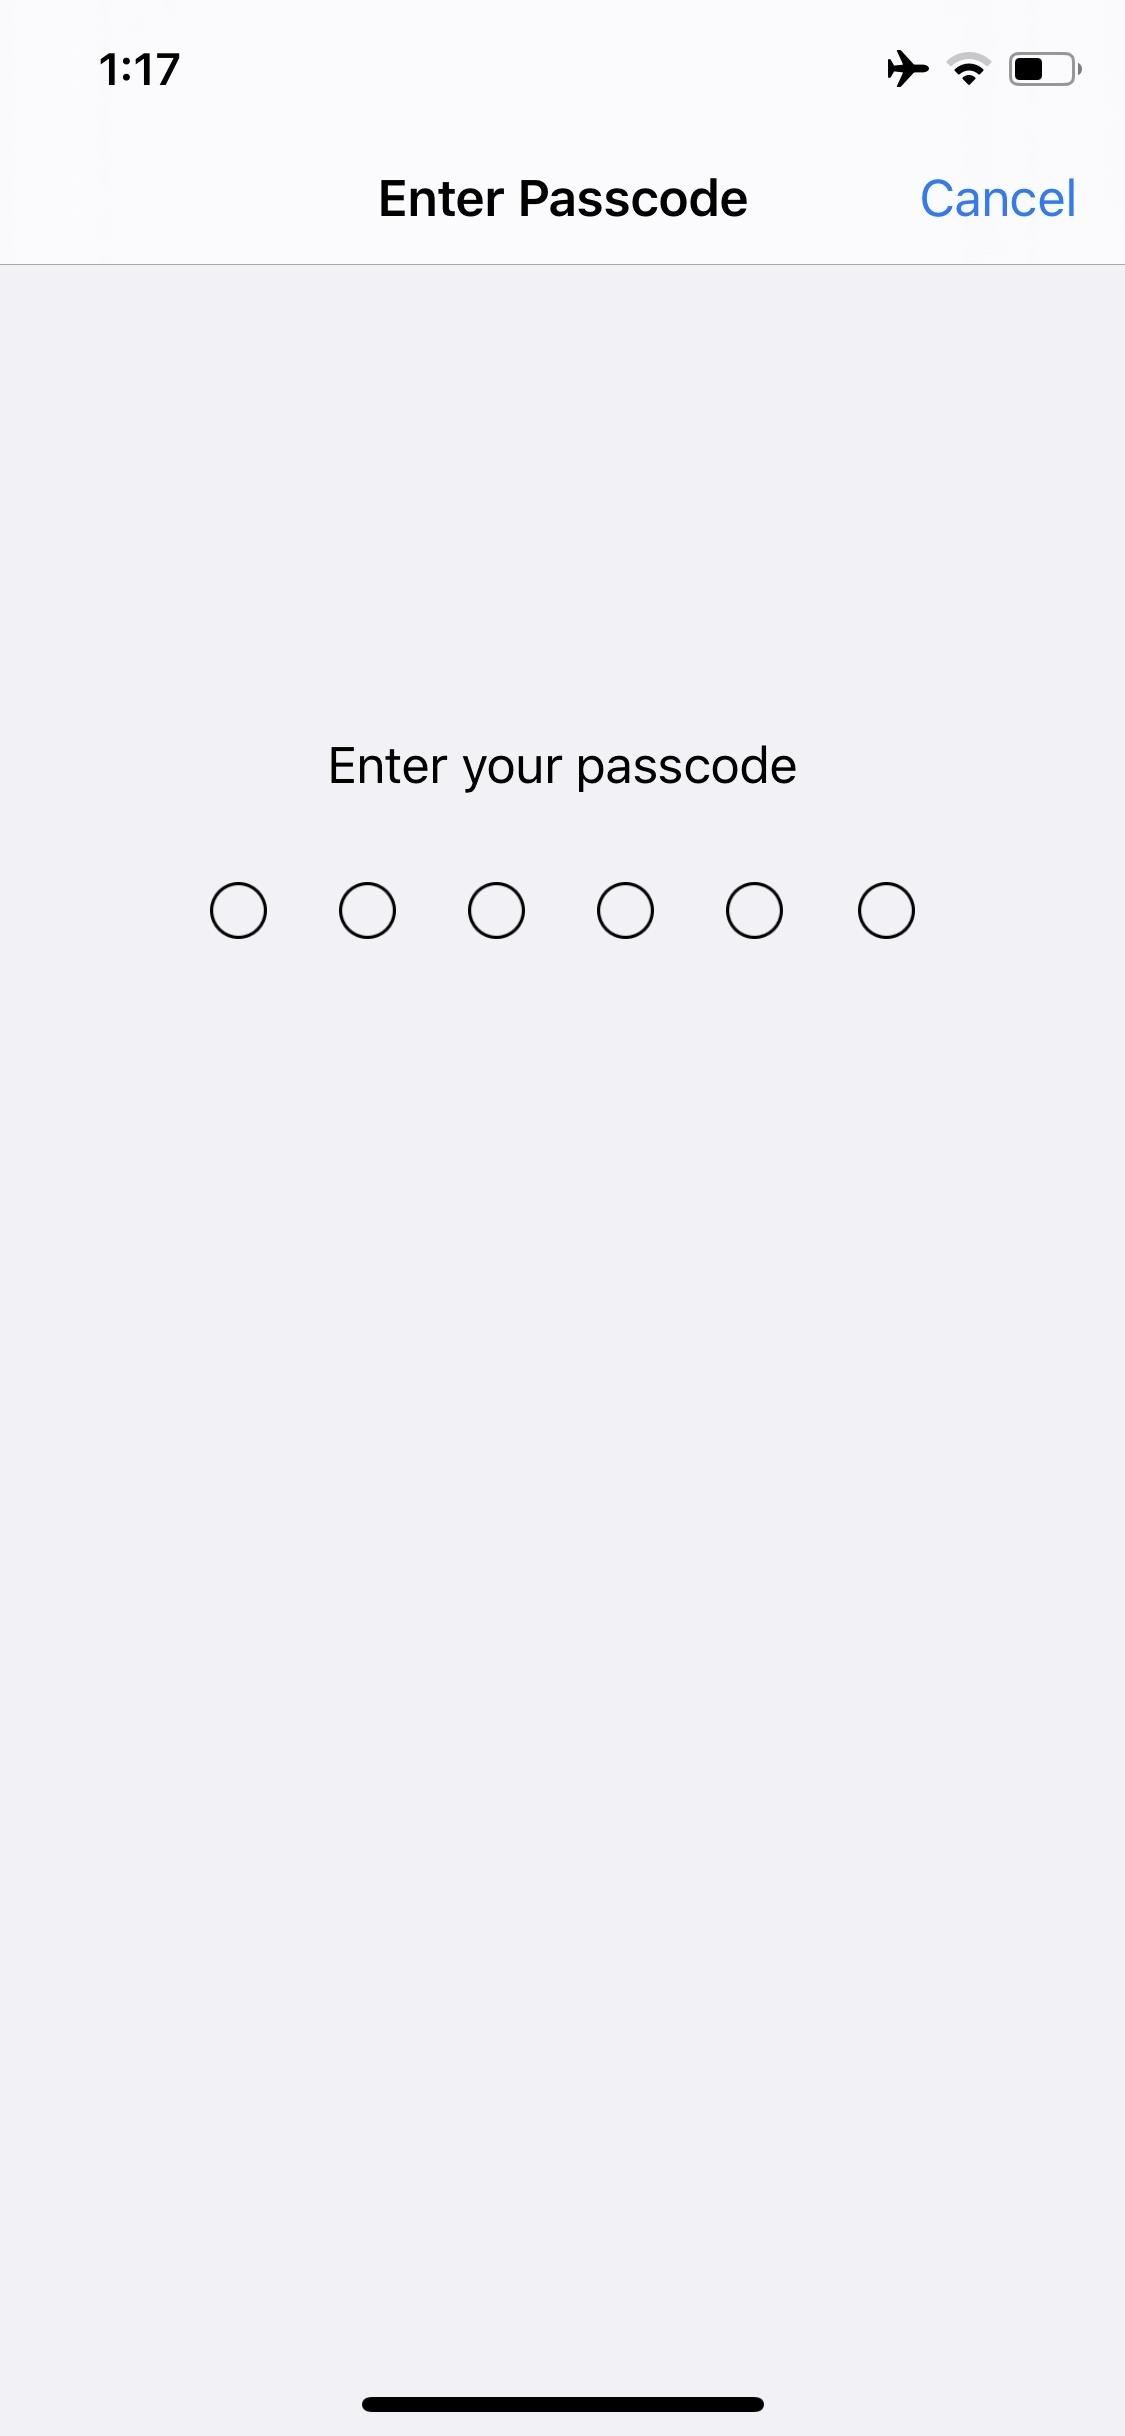 Apple's iOS 13.5 Developer GM Includes Face ID Updates, COVID-19 Exposure Notification Logging & More